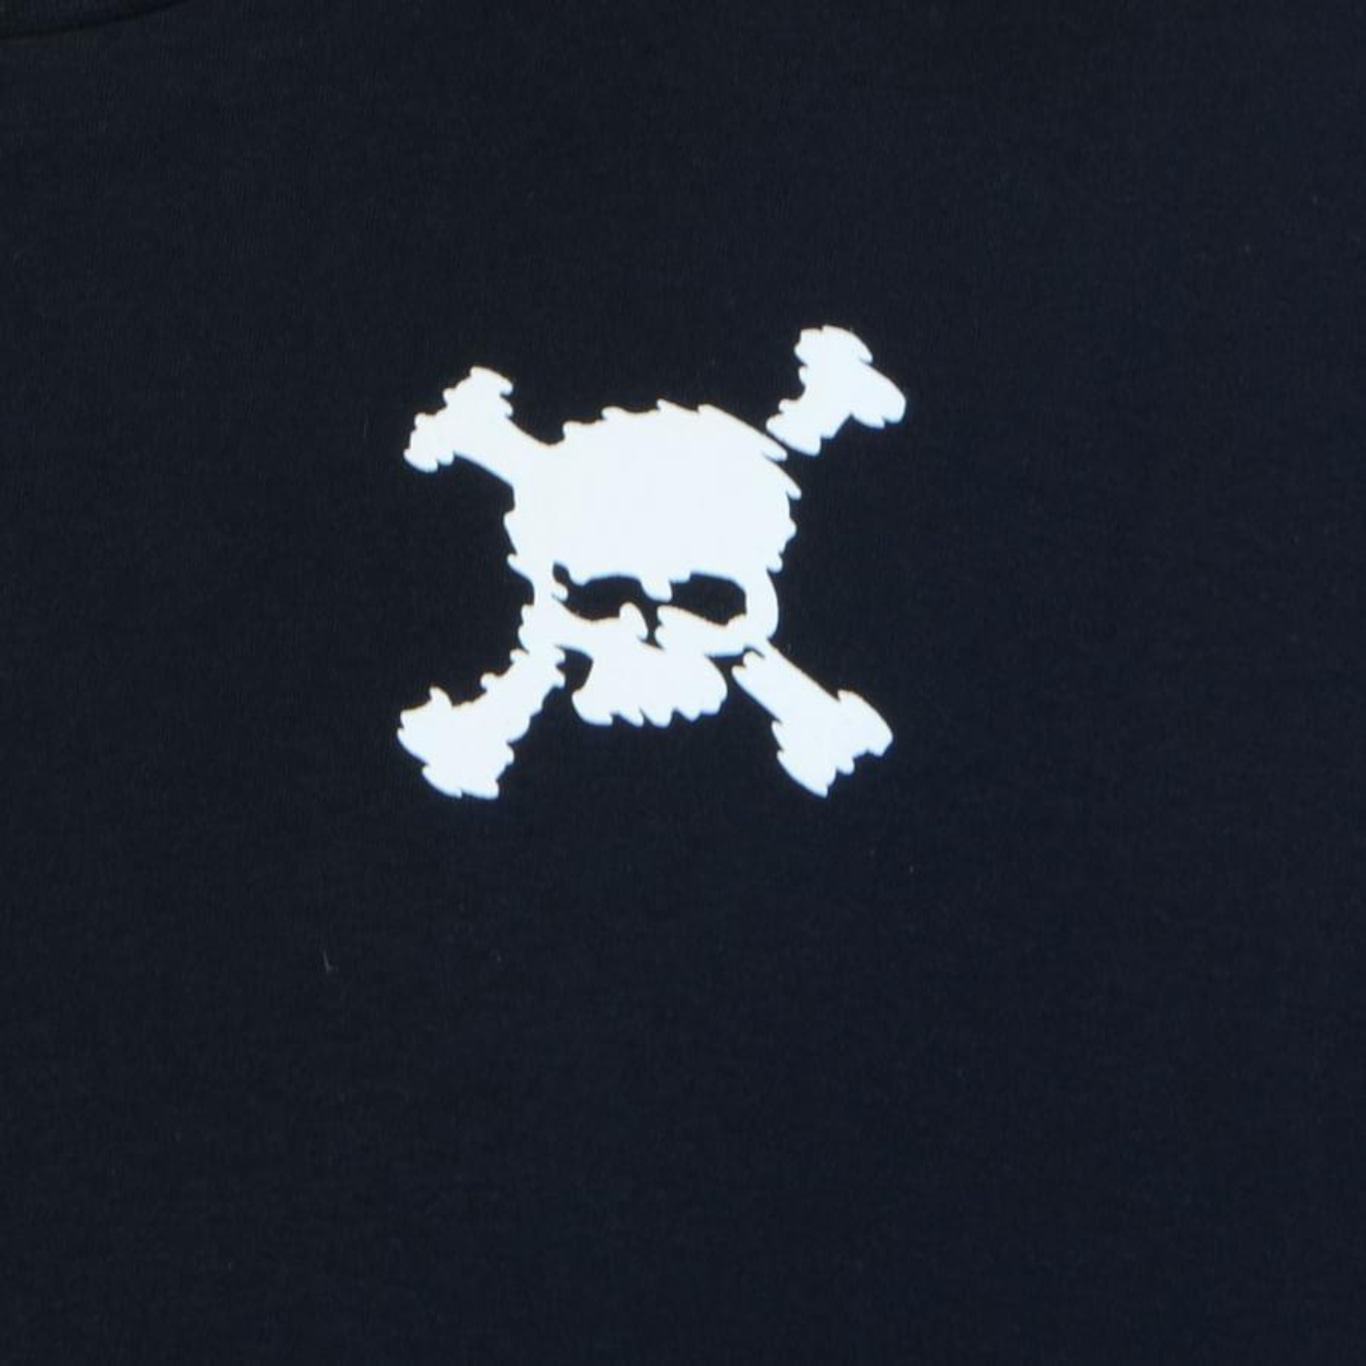 Camiseta Oakley Classic Skull Masculina - Branco